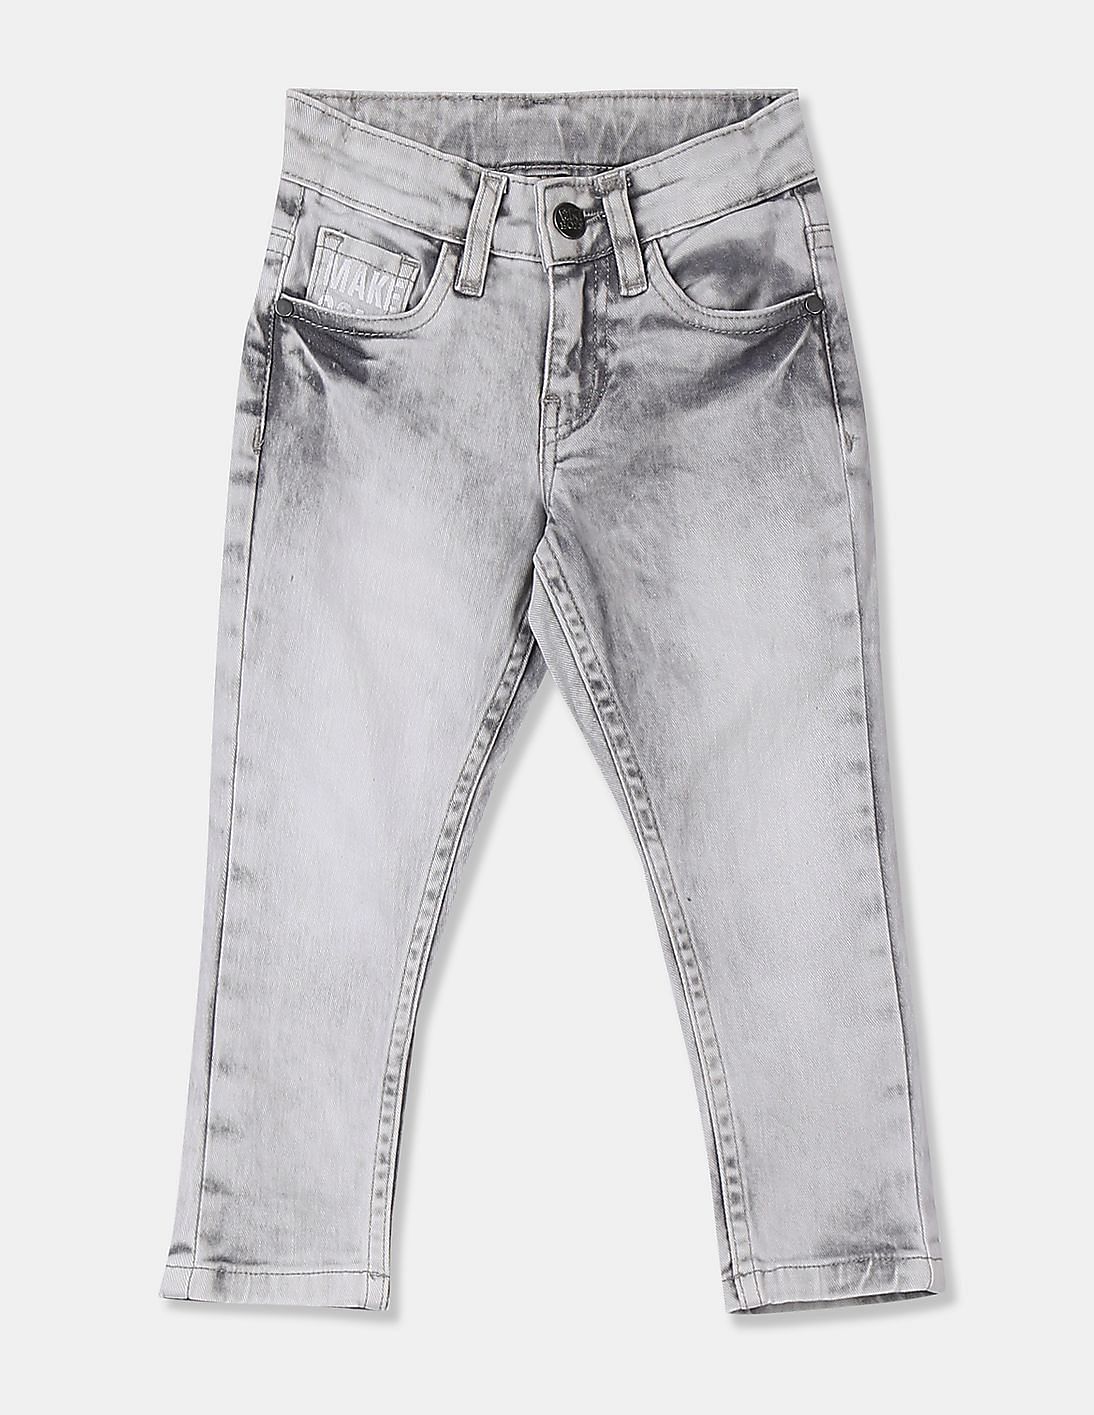 Buy FM Boys Boys Light Grey Skinny Fit Faded Jeans - NNNOW.com